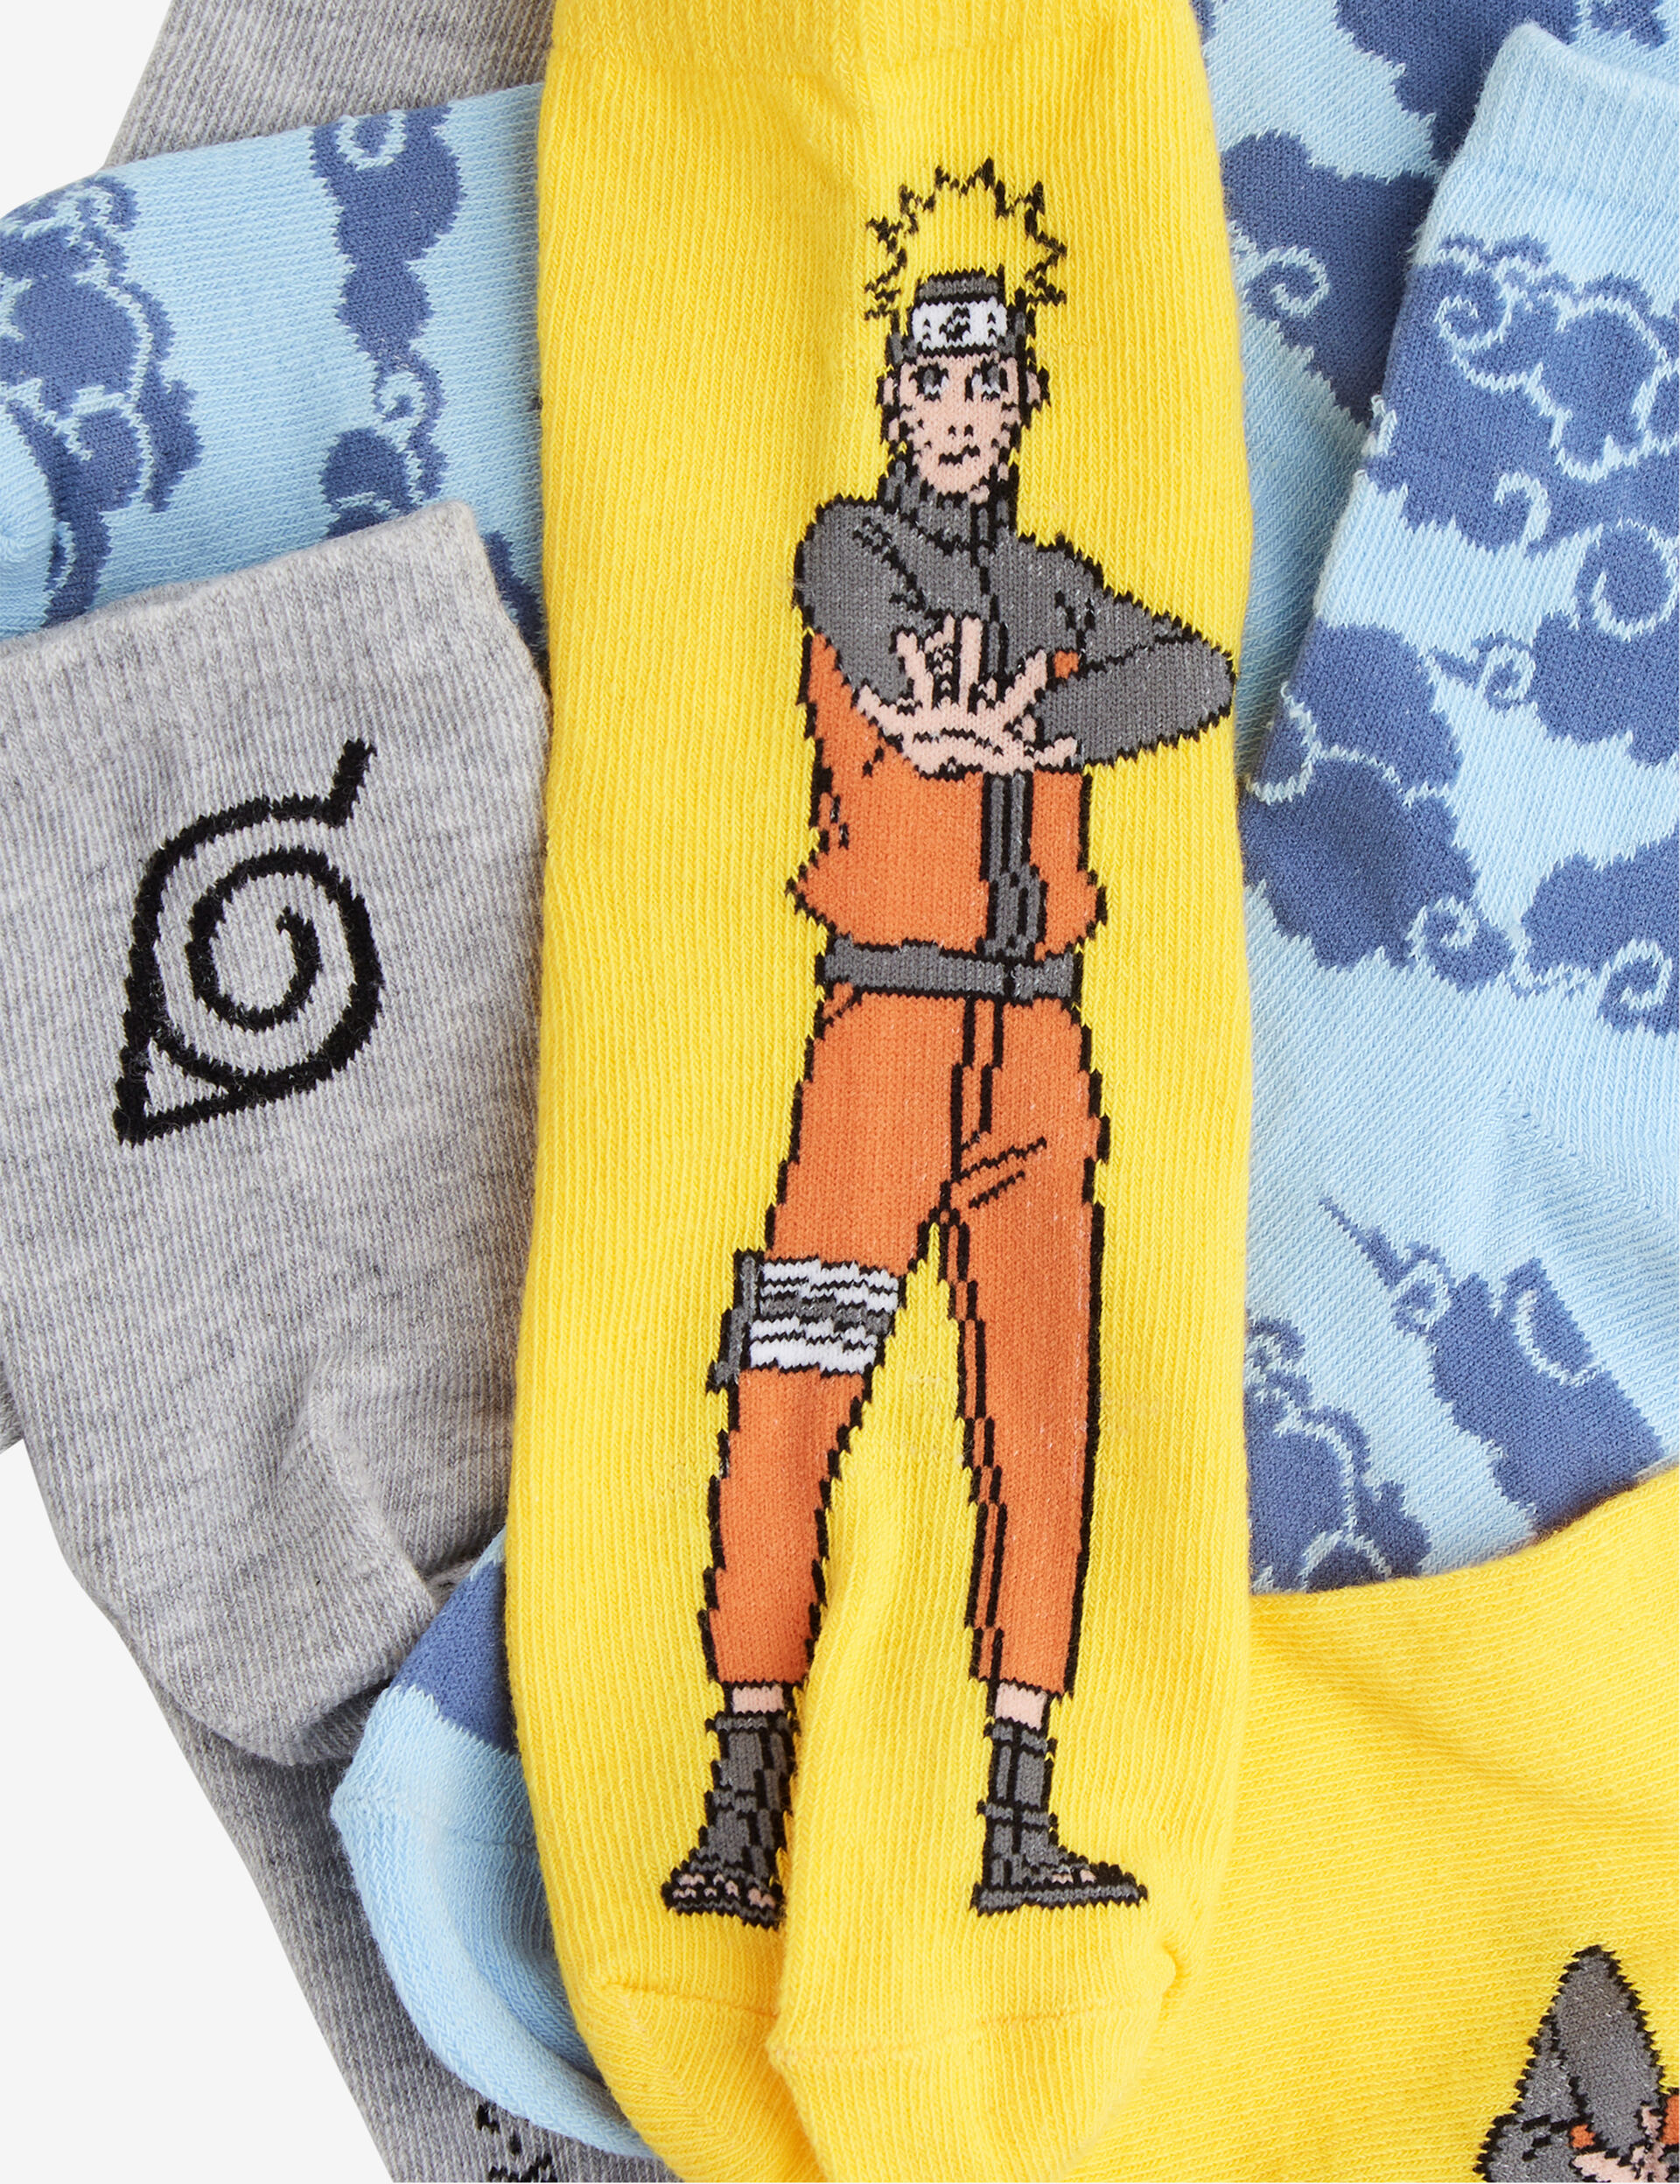 Naruto socks